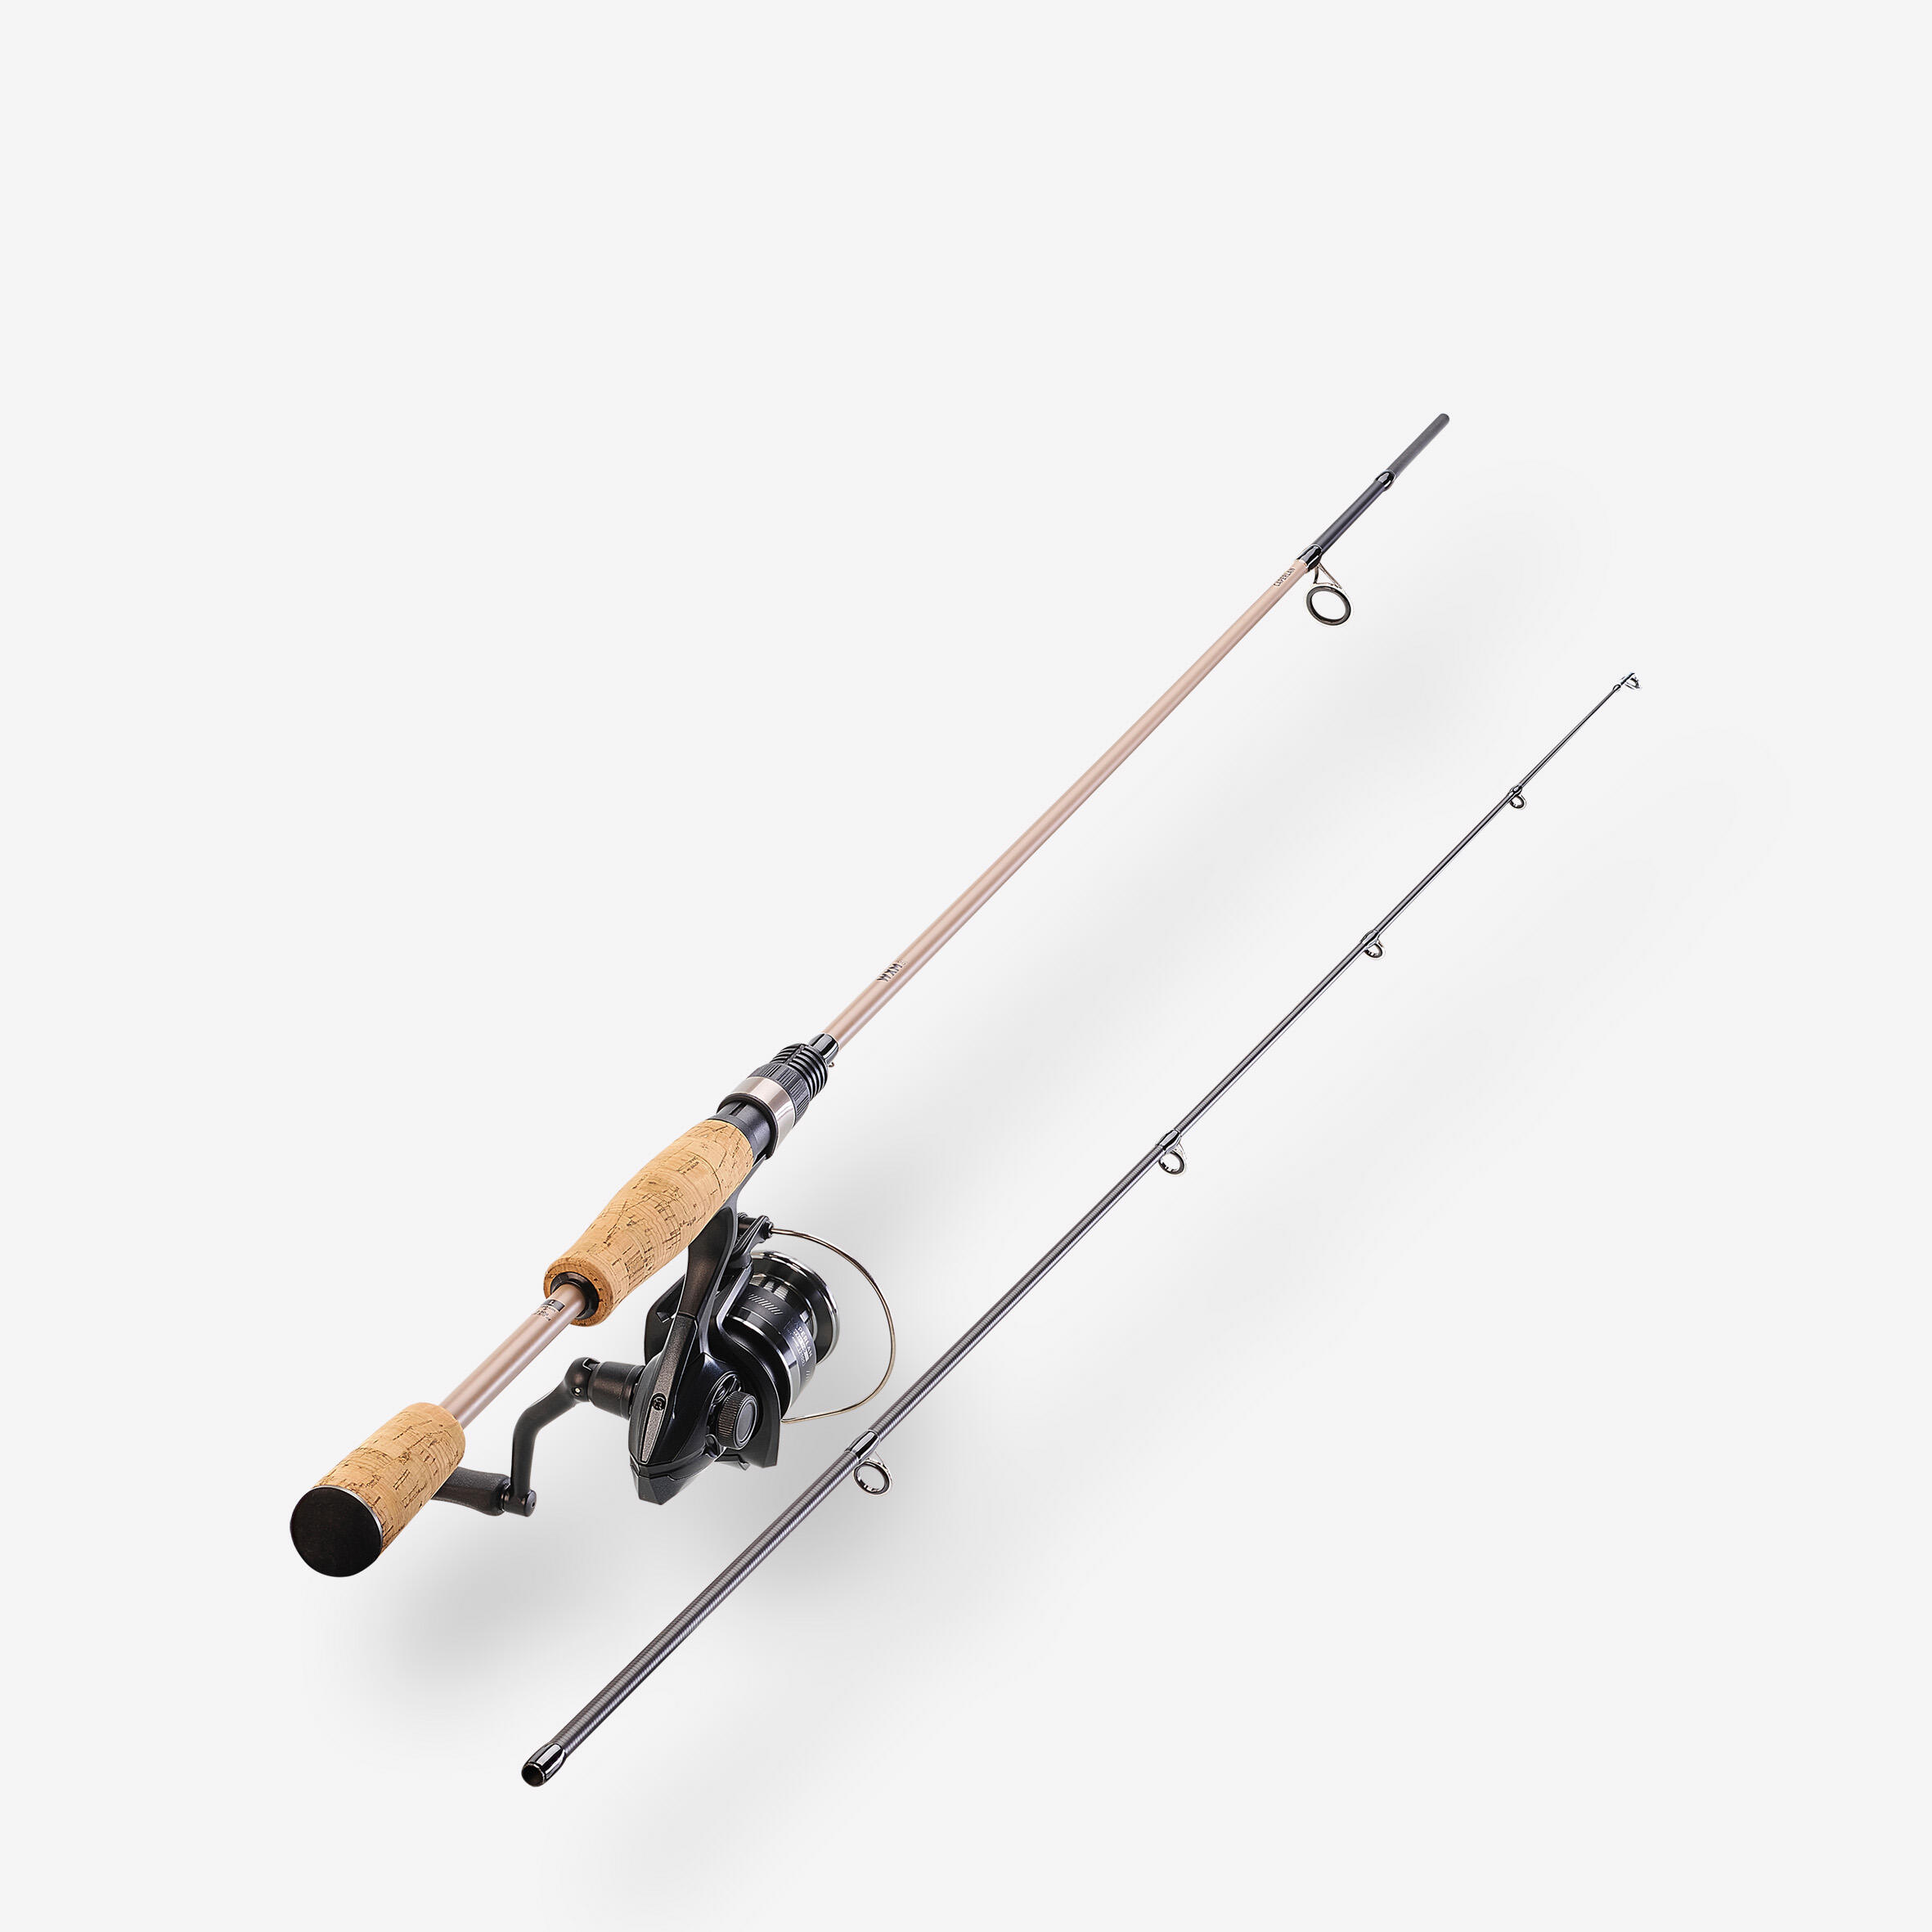 Lure Fishing Combo - WXM 100 1.80 m L (2-10 G)